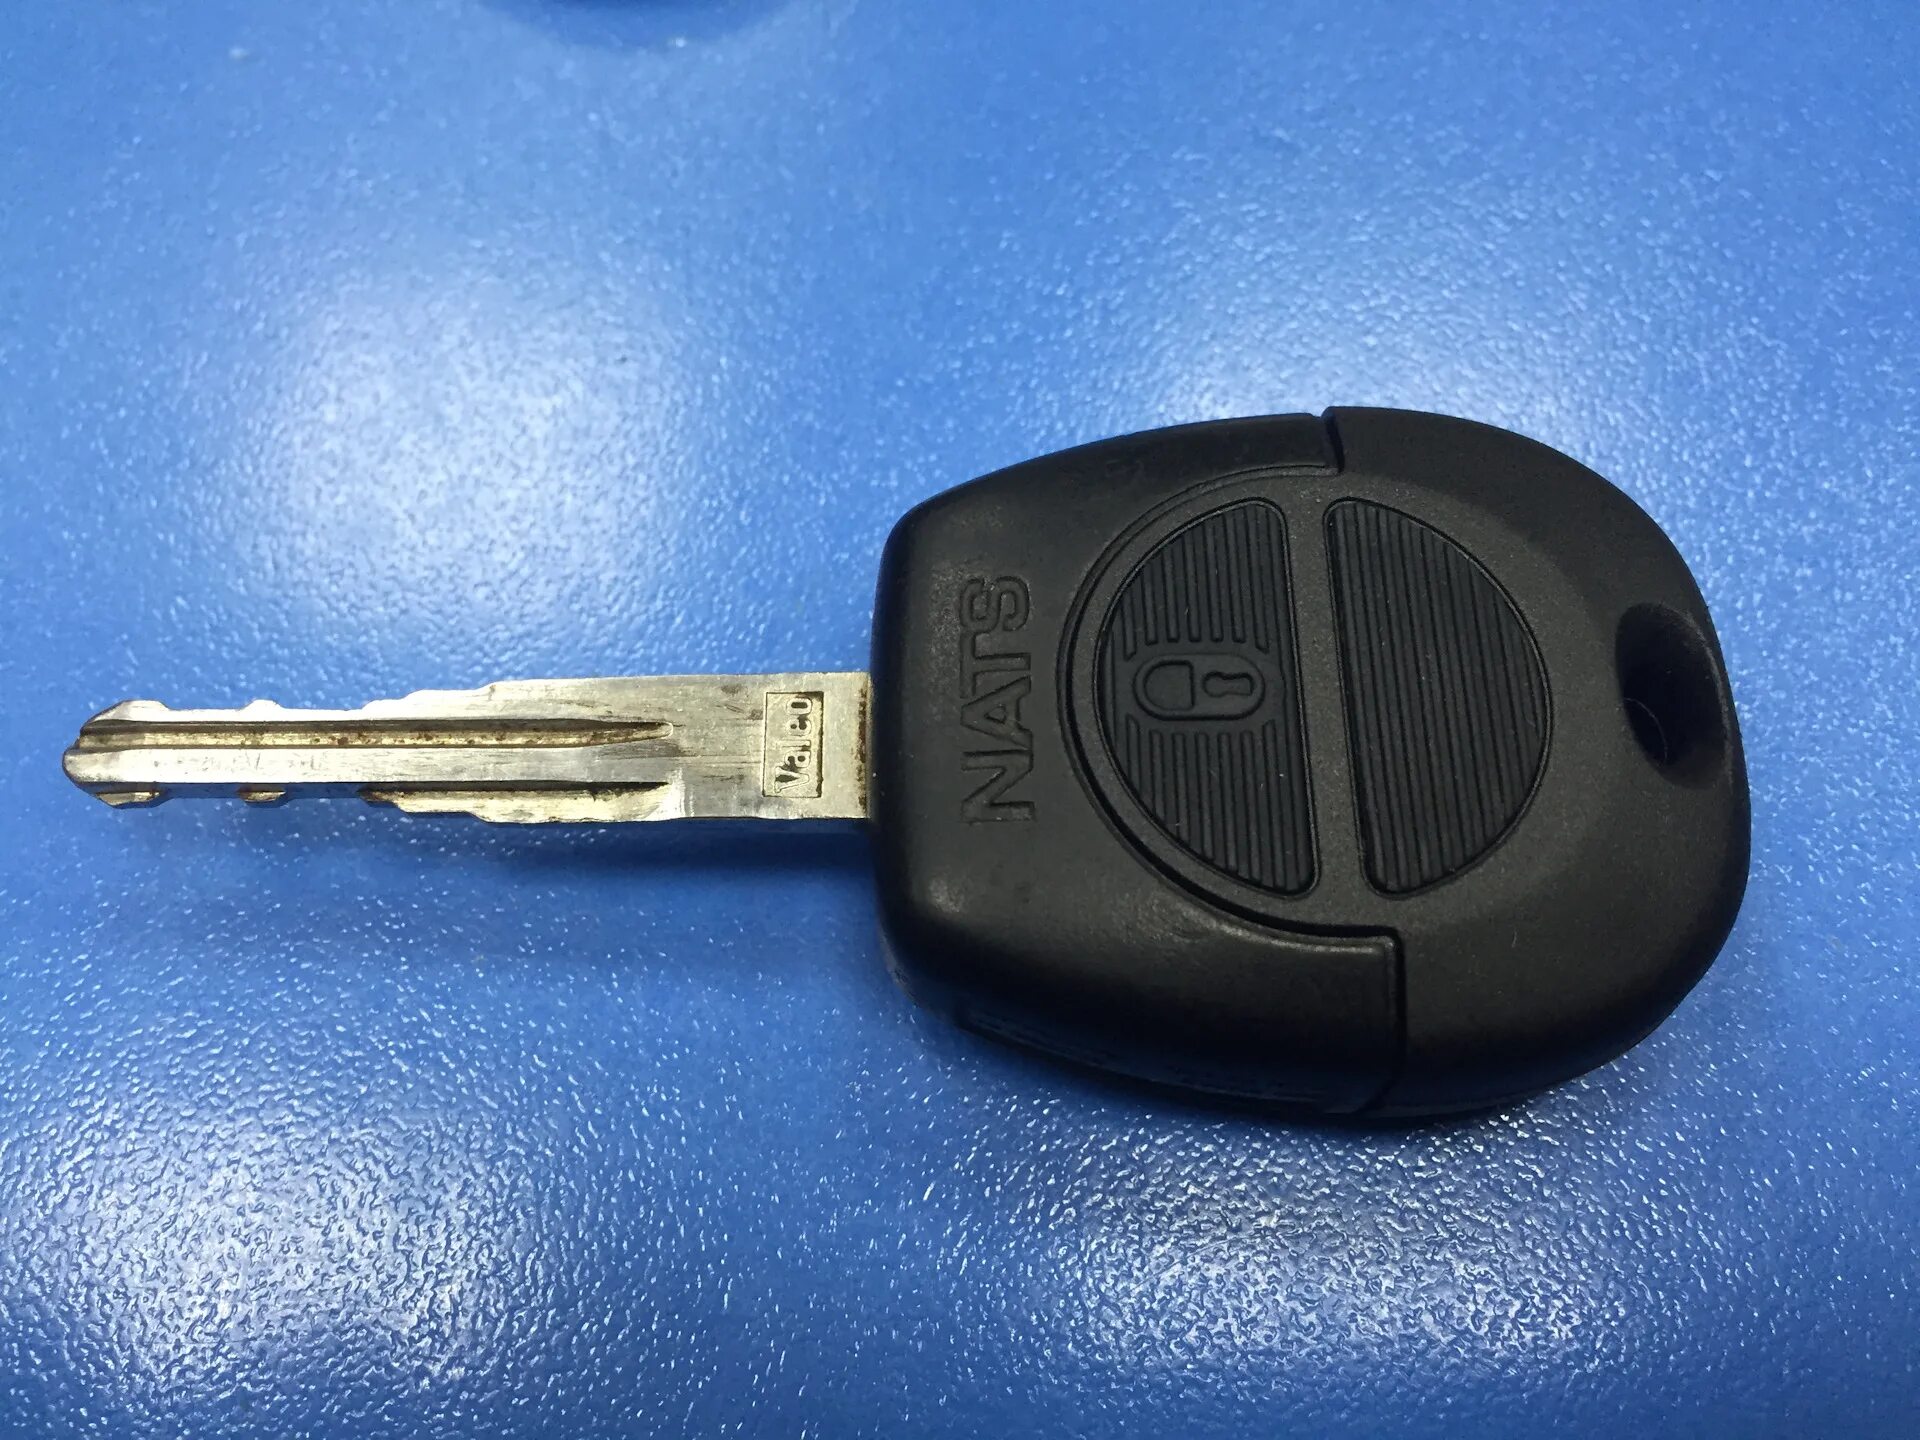 Ключ зажигания Nissan Pulsar 1997 120 Kc. Ключ зажигания Ниссан Альмера Классик. Ключ от Ниссан Санни 1996. Ключ зажигания Silverado 2001.